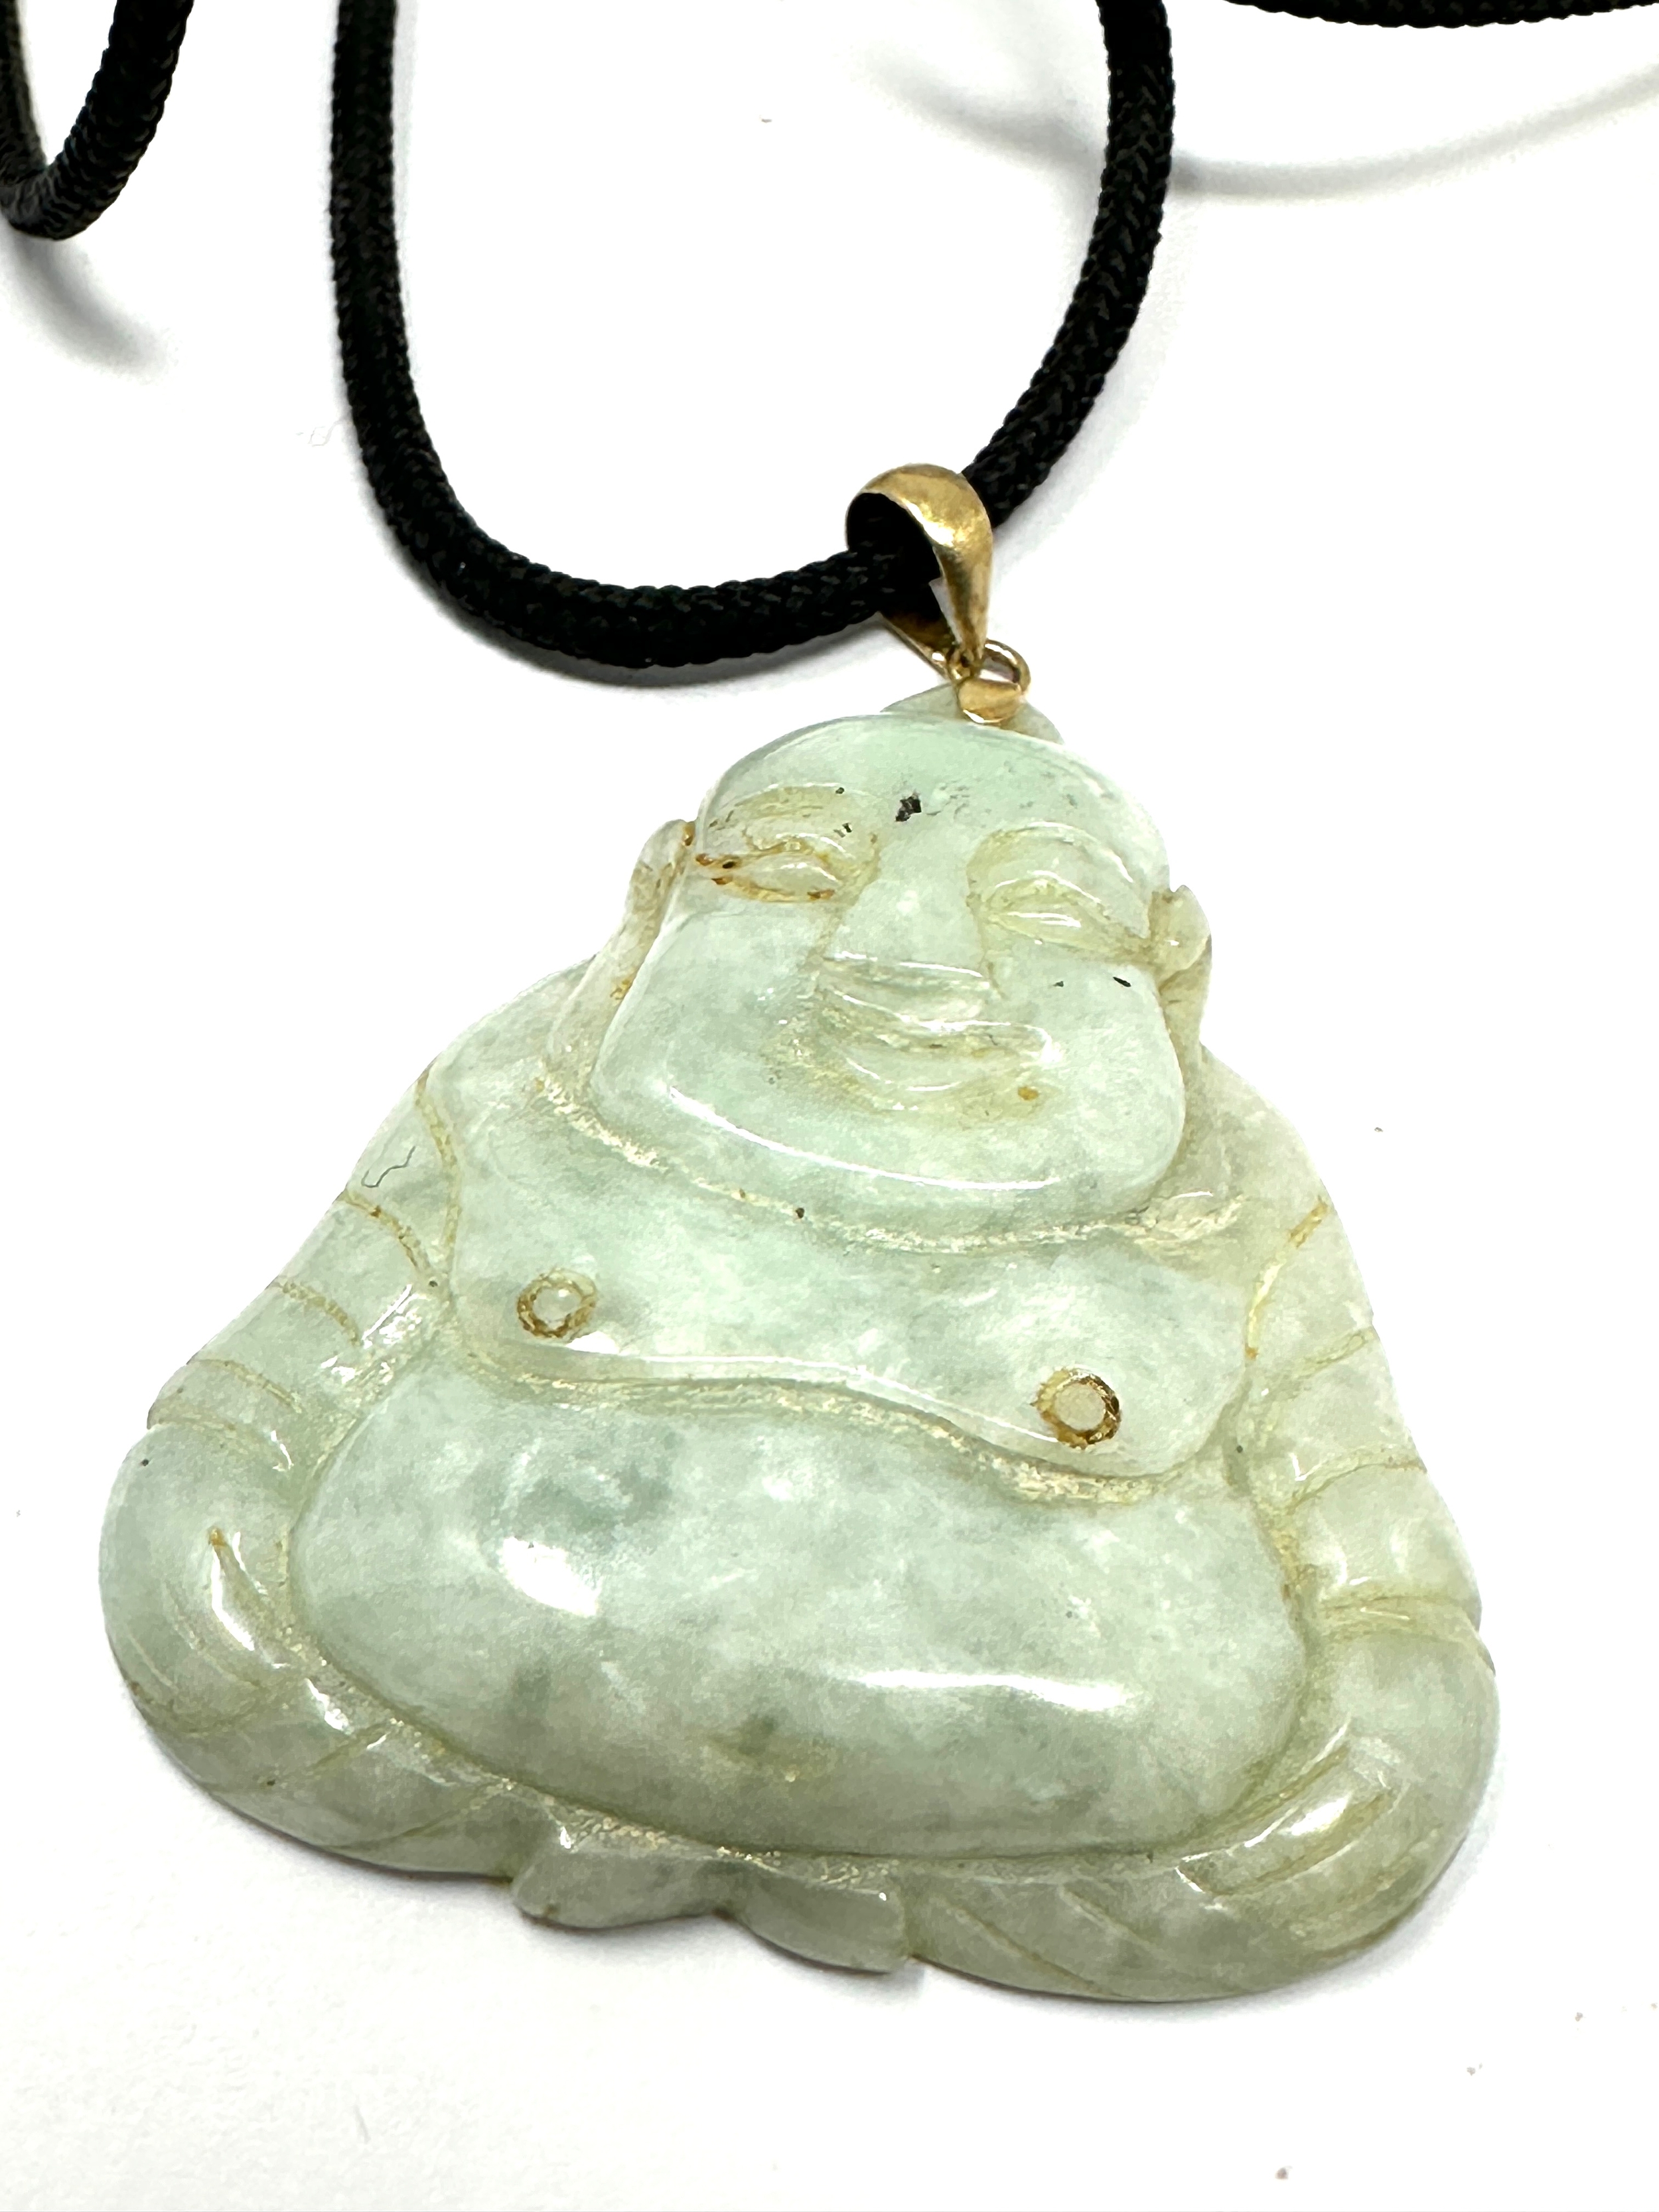 14ct gold bale jade buddha pendant necklace weight 14g - Image 2 of 3